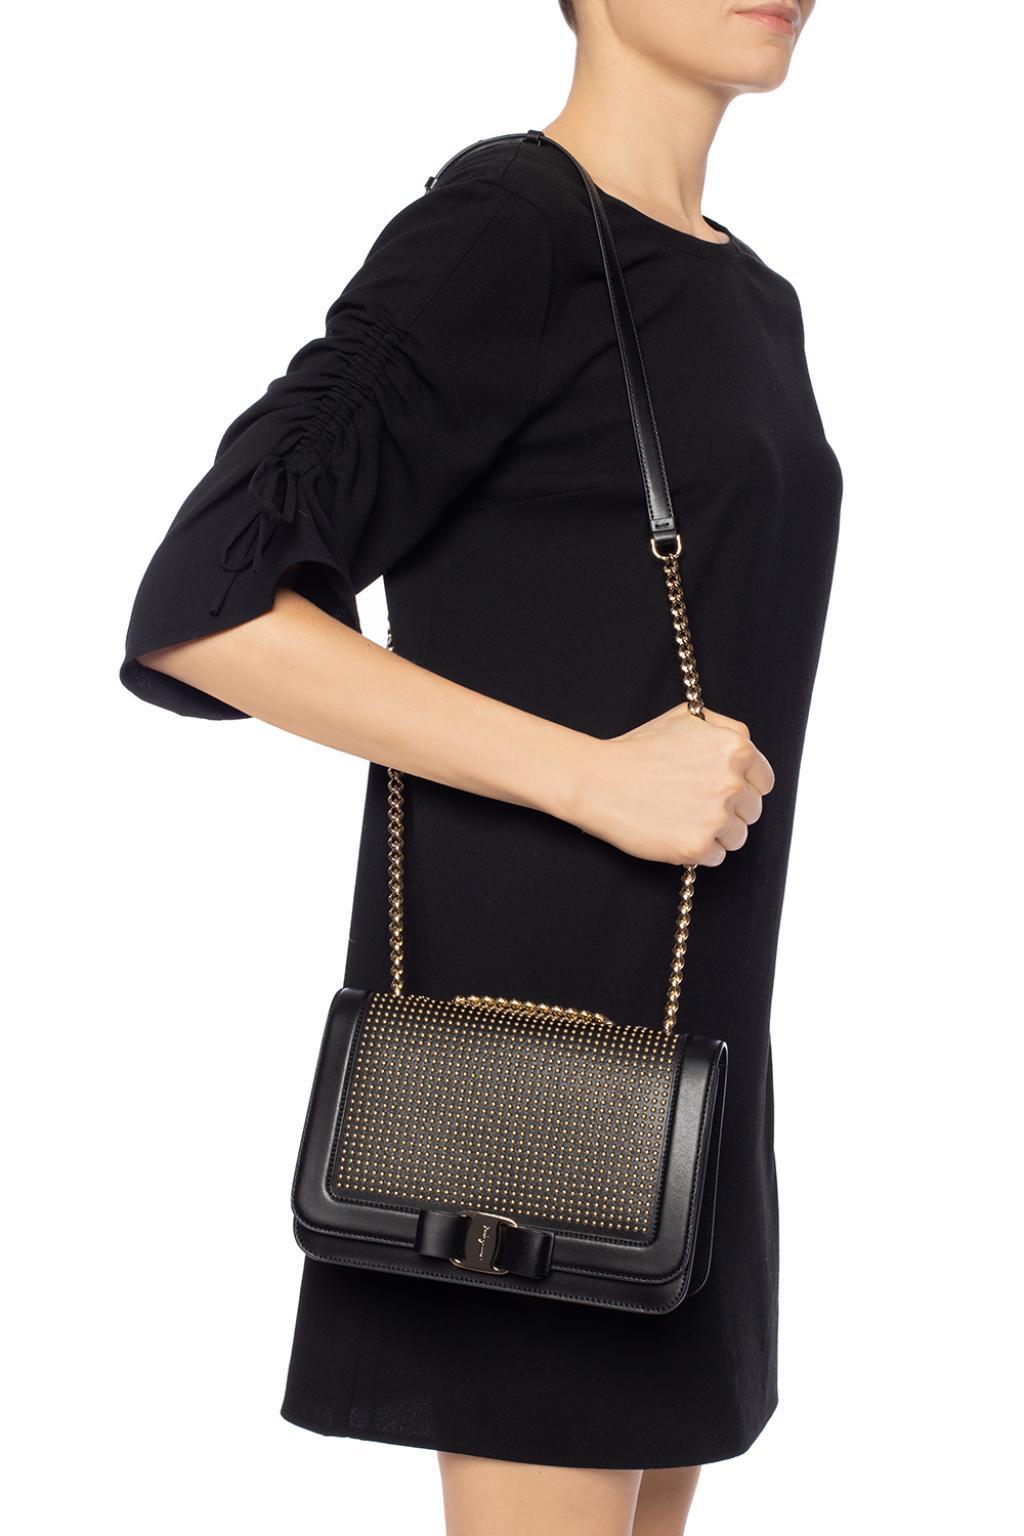 Ferragamo Leather Vara Bow Studded Shoulder Bag in Black - Lyst